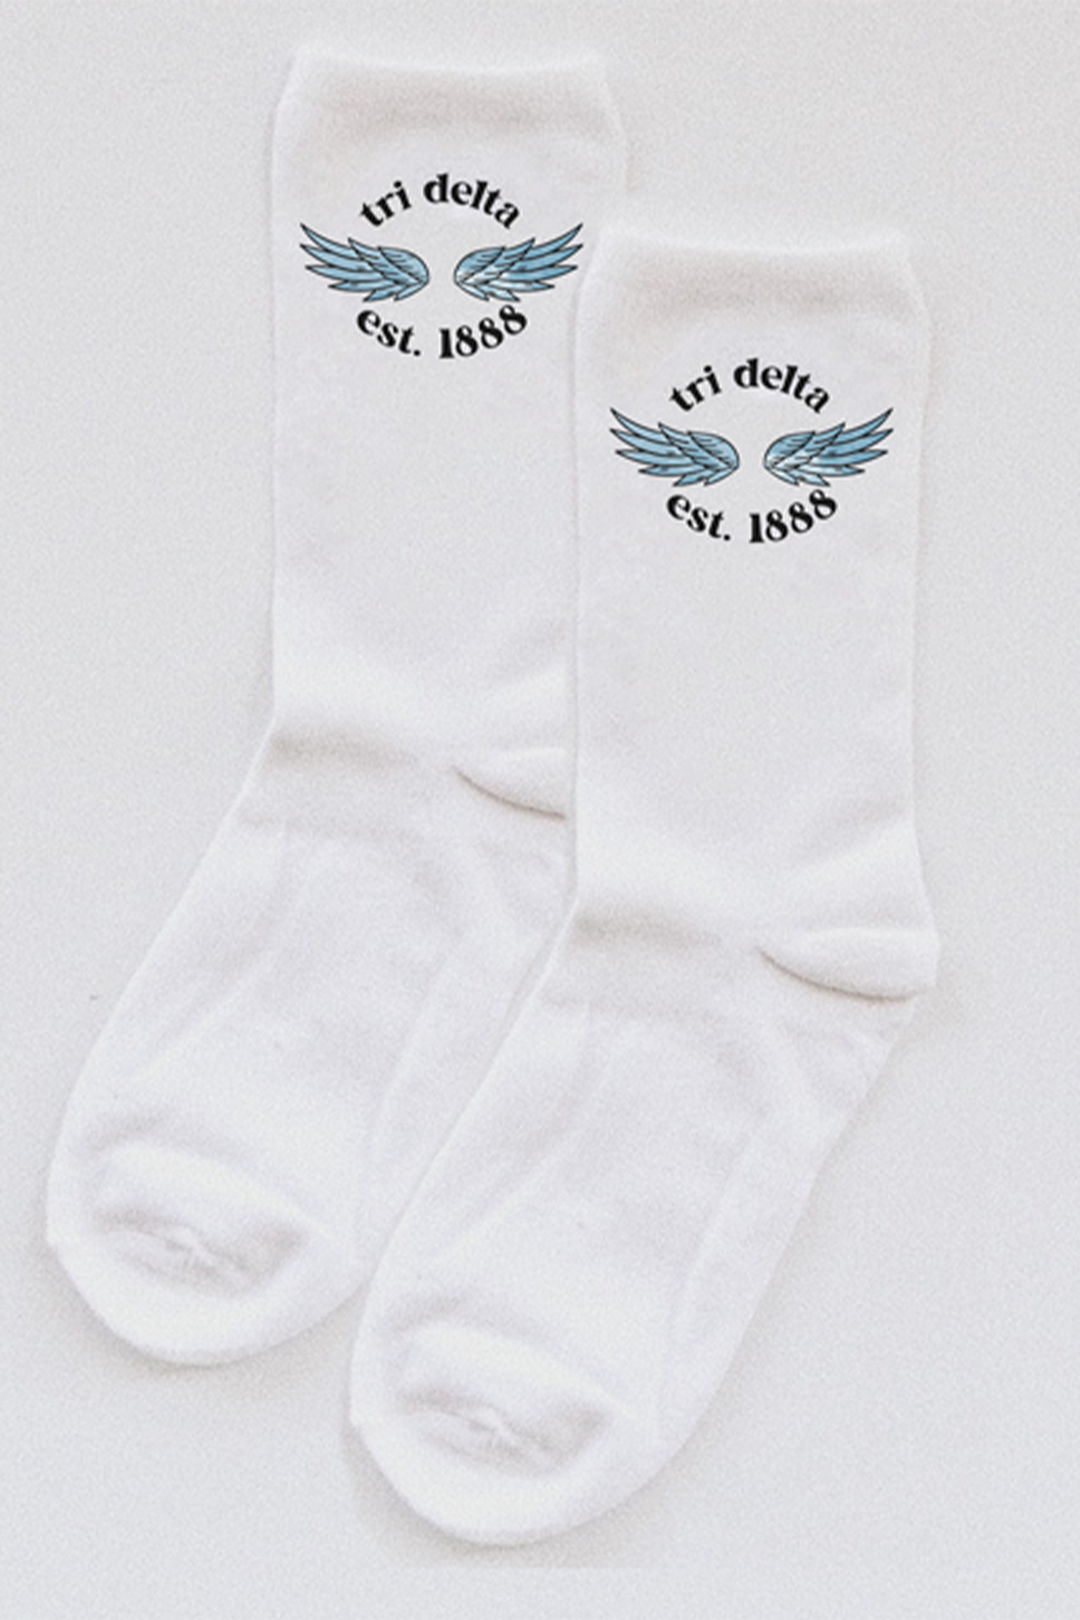 Angel Wing socks - Tri Delta